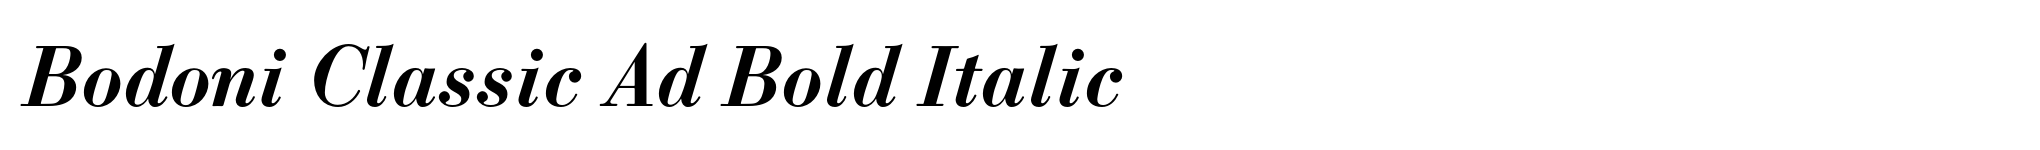 Bodoni Classic Ad Bold Italic image